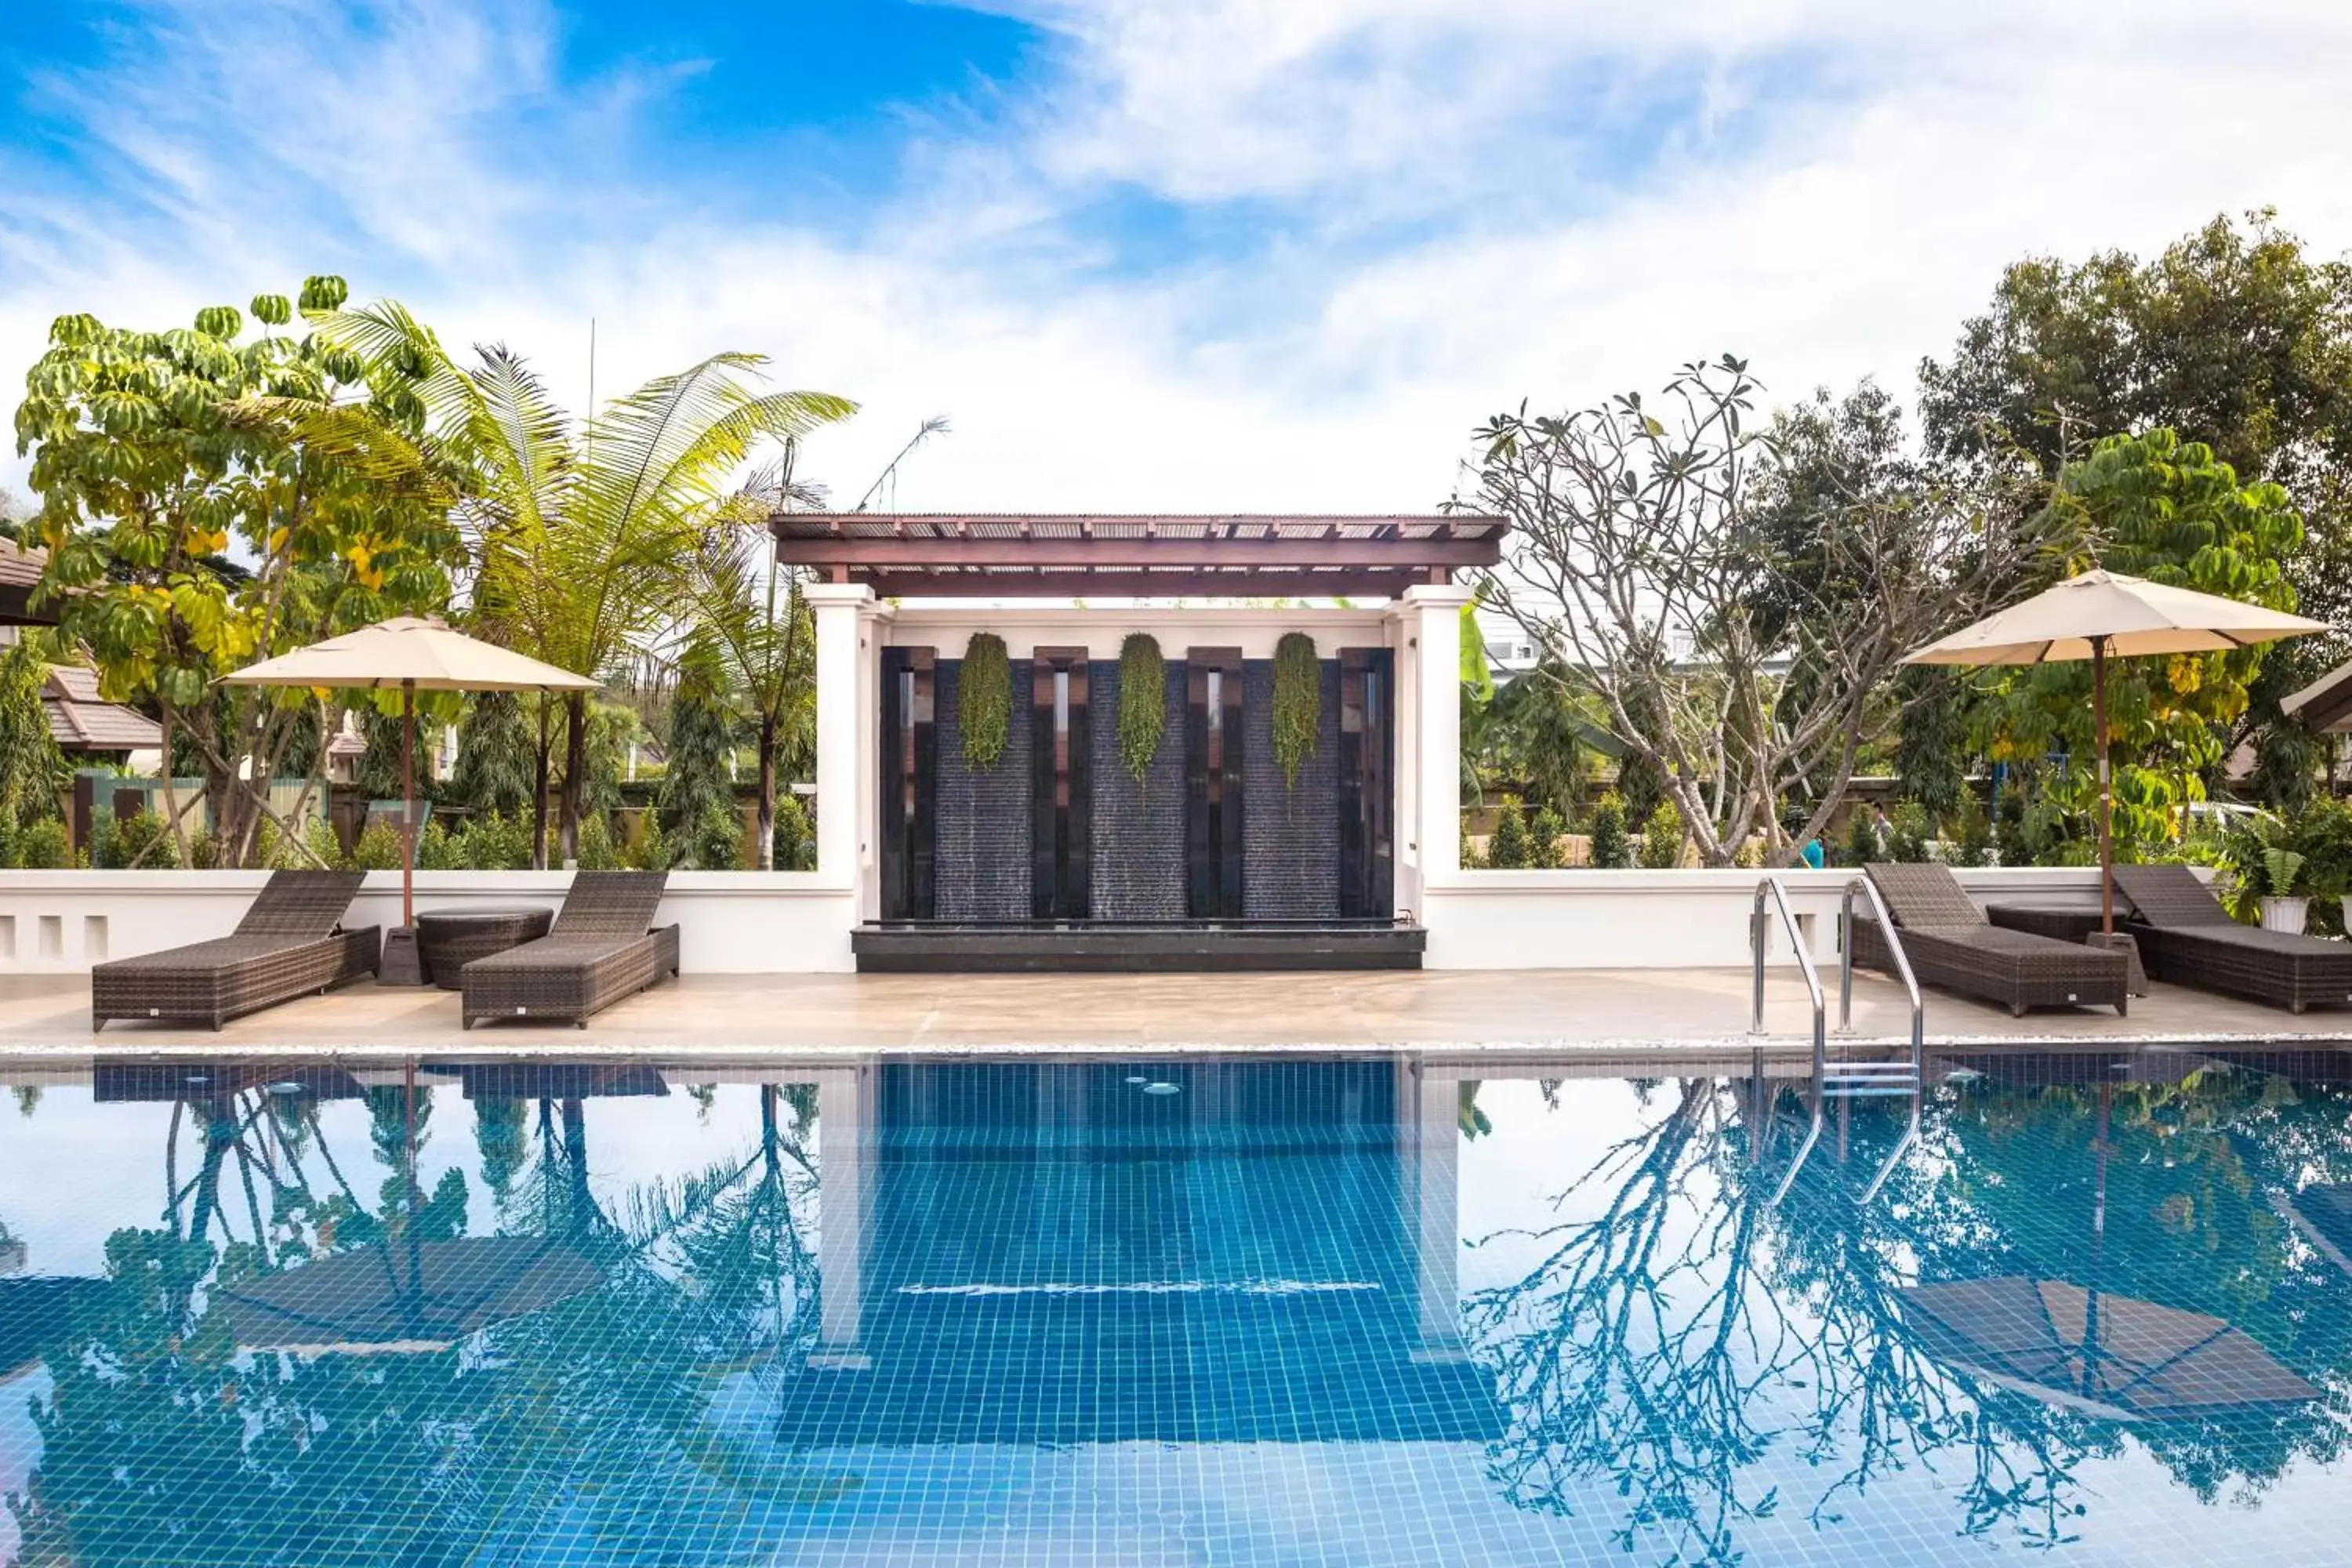 Swimming Pool in Content Villa Chiangmai